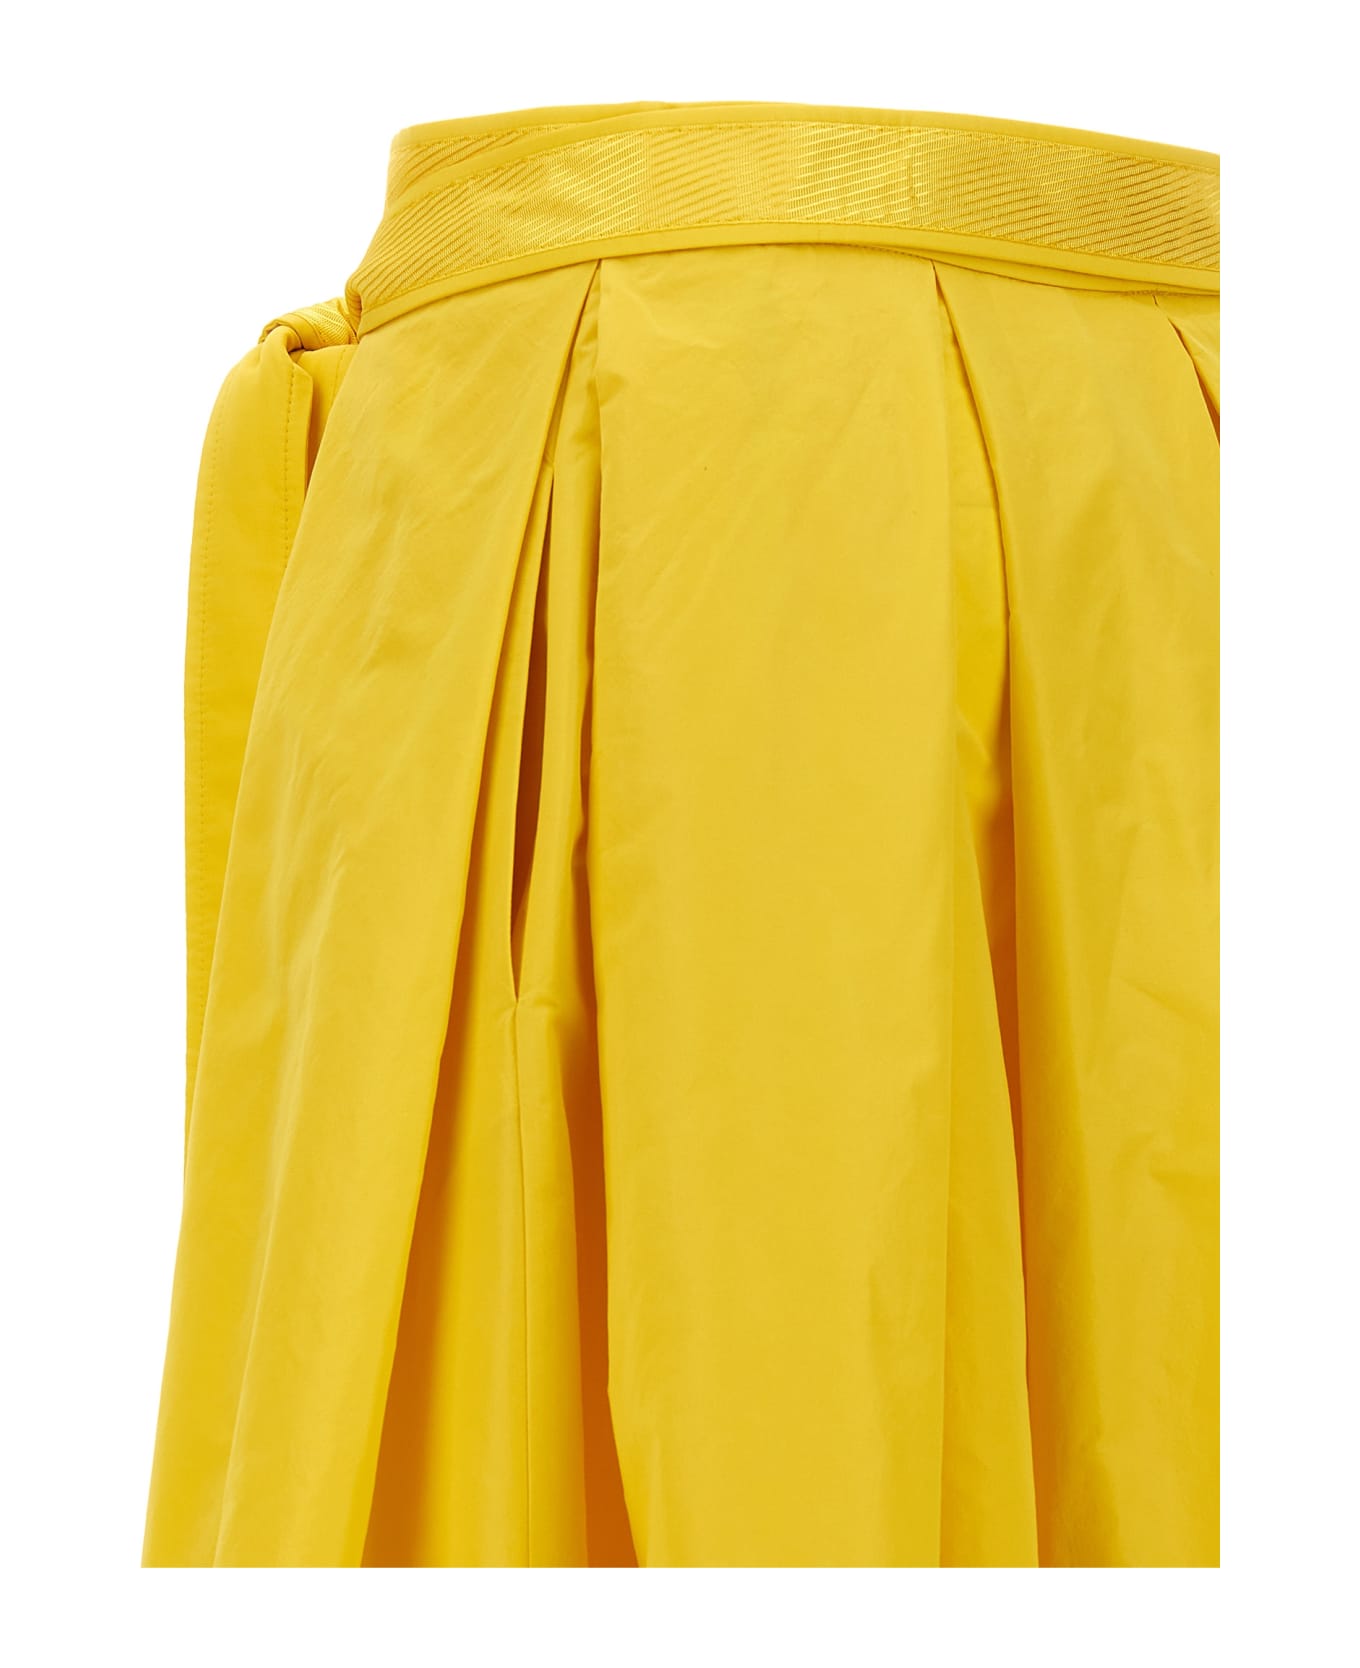 Pinko Nocepesca Taffeta Skirt - Yellow